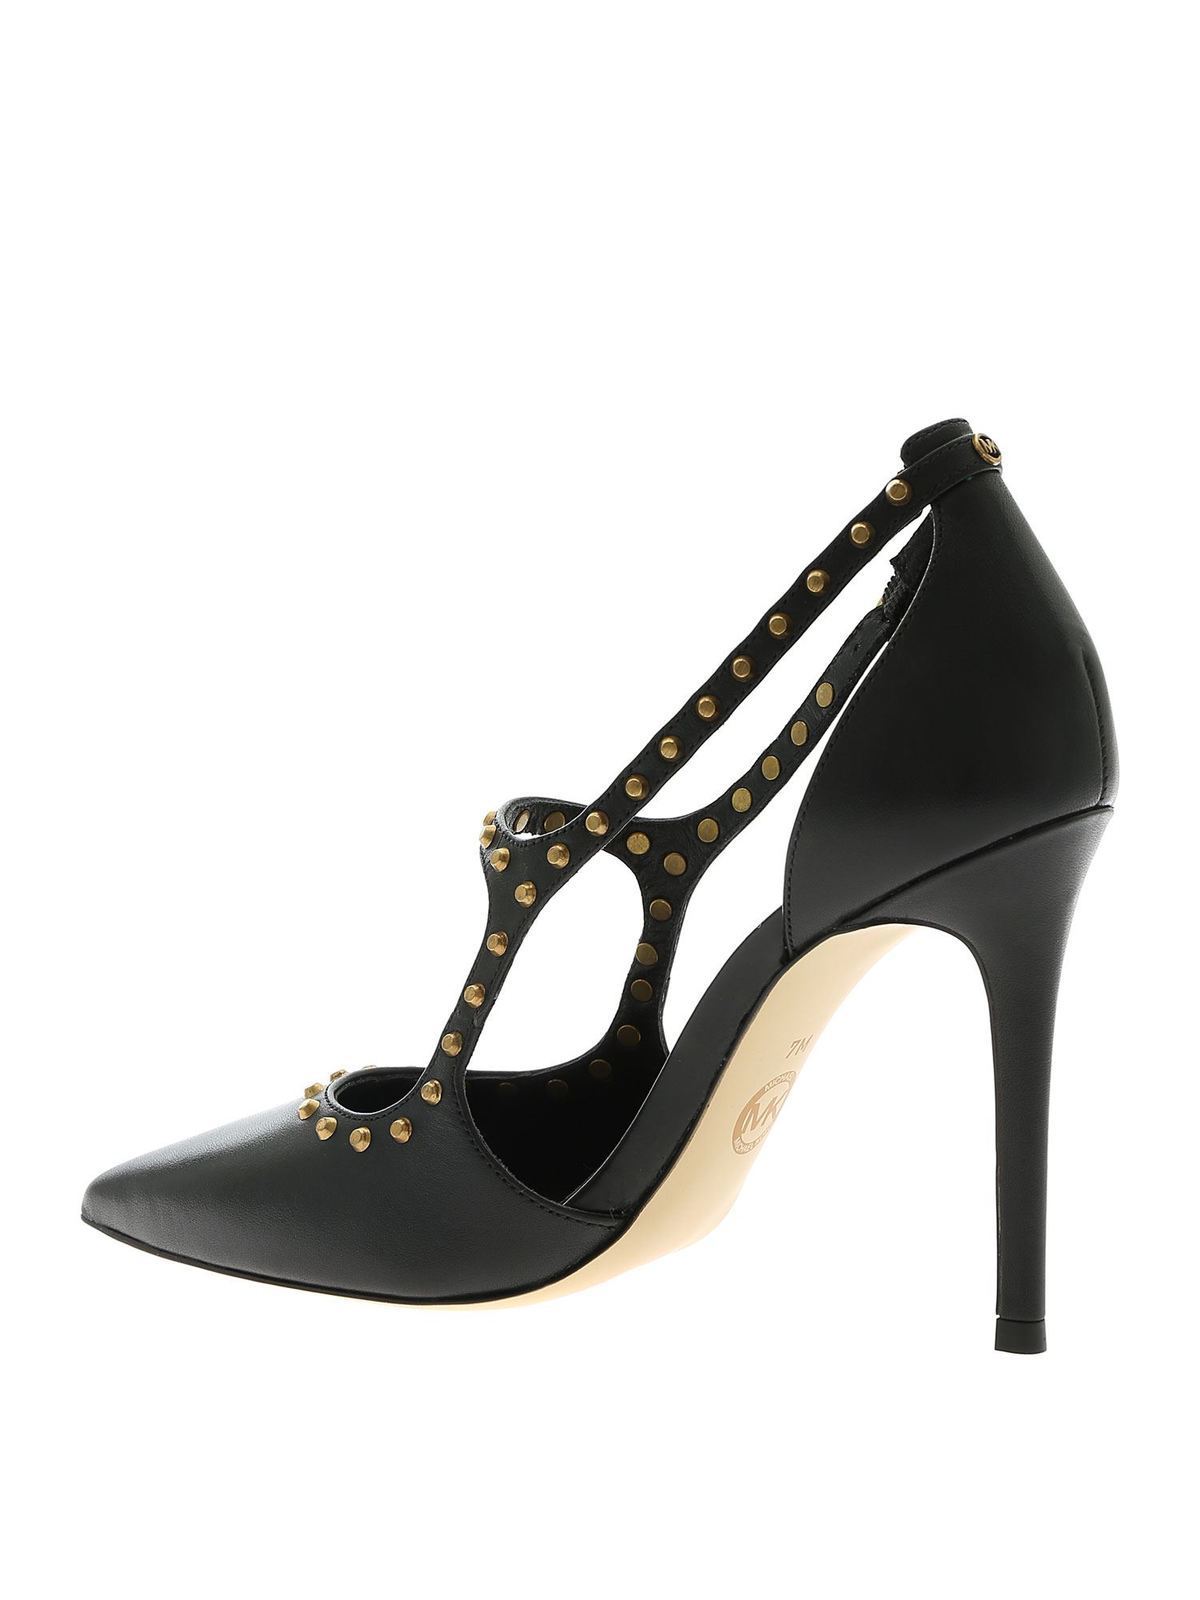 Court shoes Michael Kors - Ava Pumps in black - 40F9AVHS1LBLACK